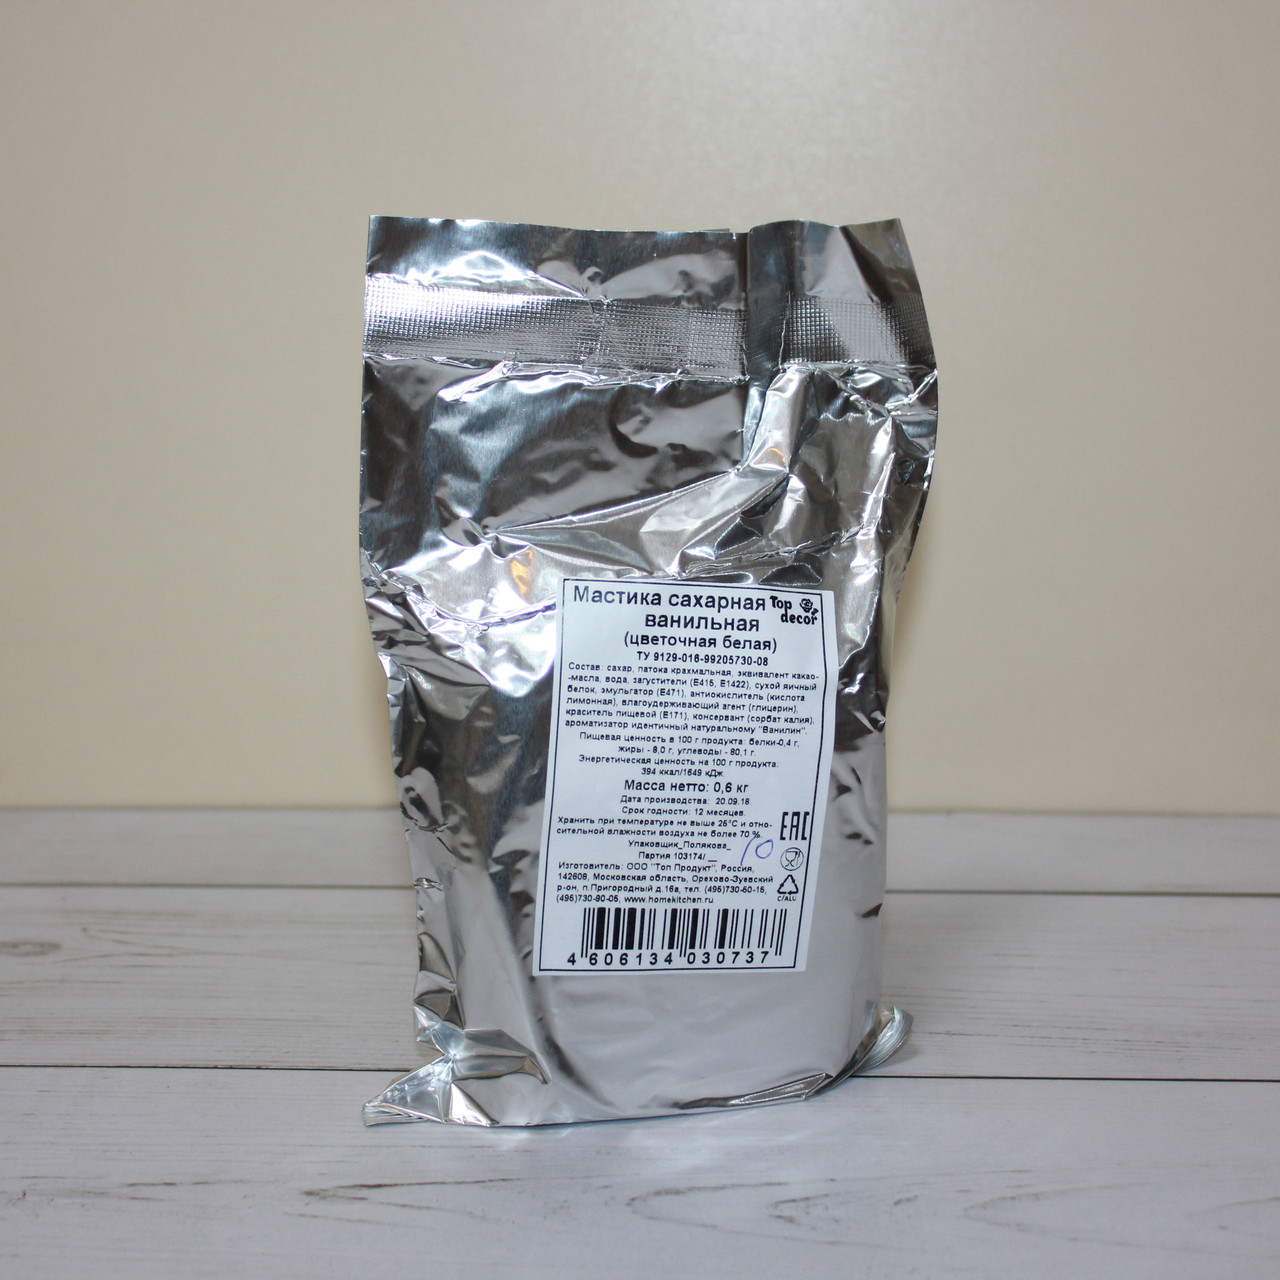 Сахарная мастика Топ продукт Цветочная Белая 0,6 кг